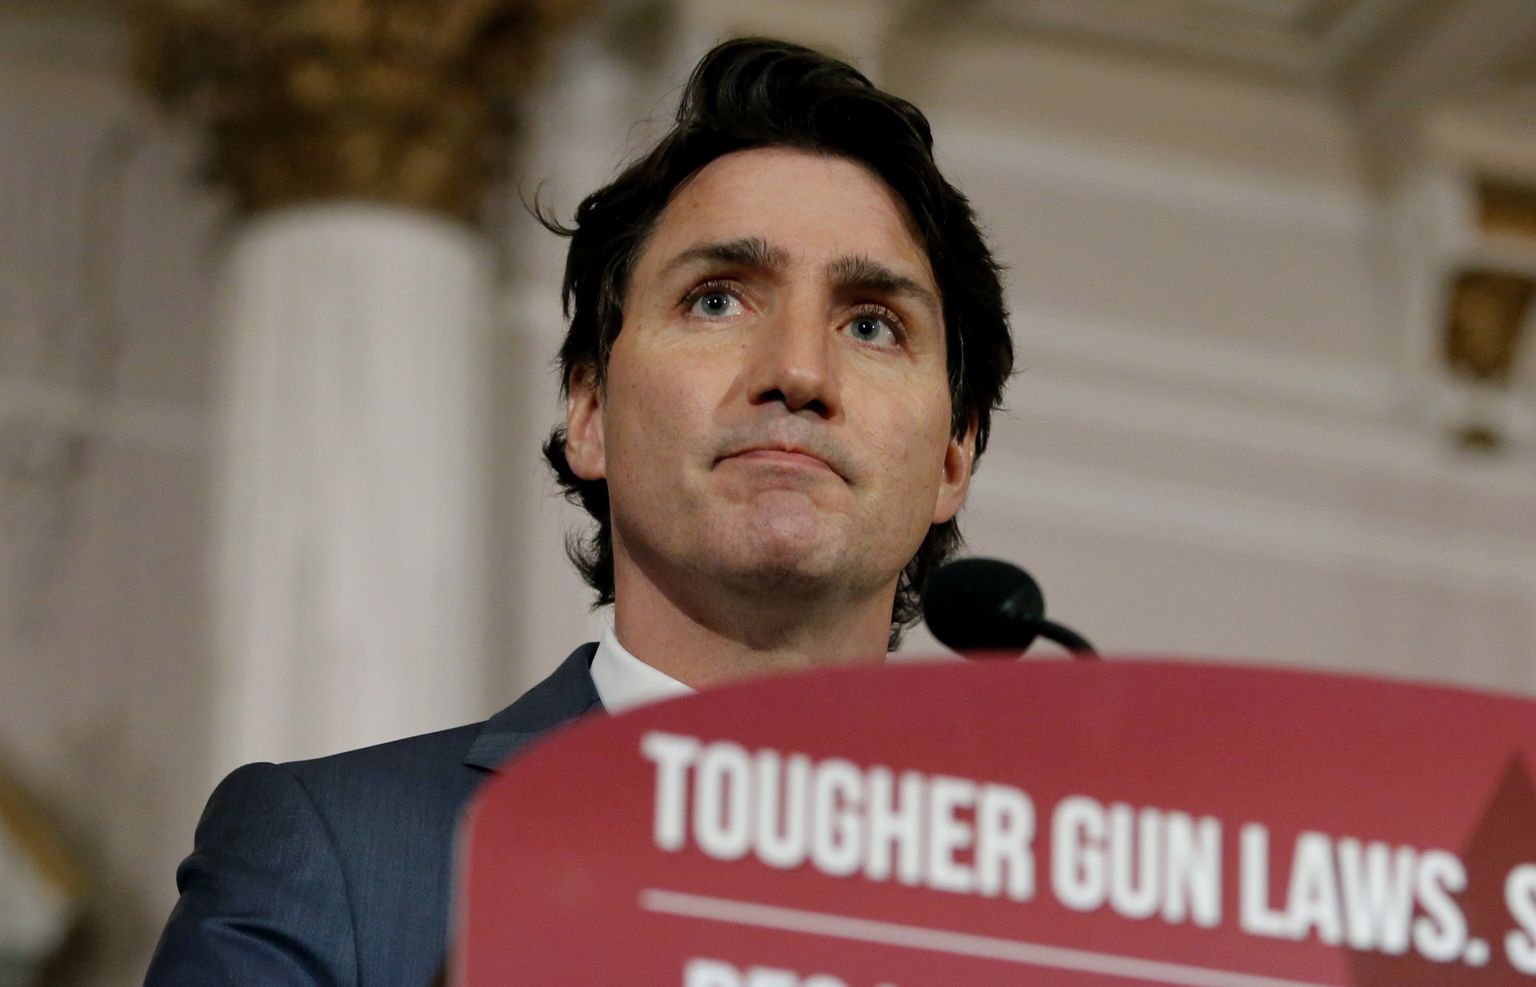 Kanada peaminister Justin Trudeau.